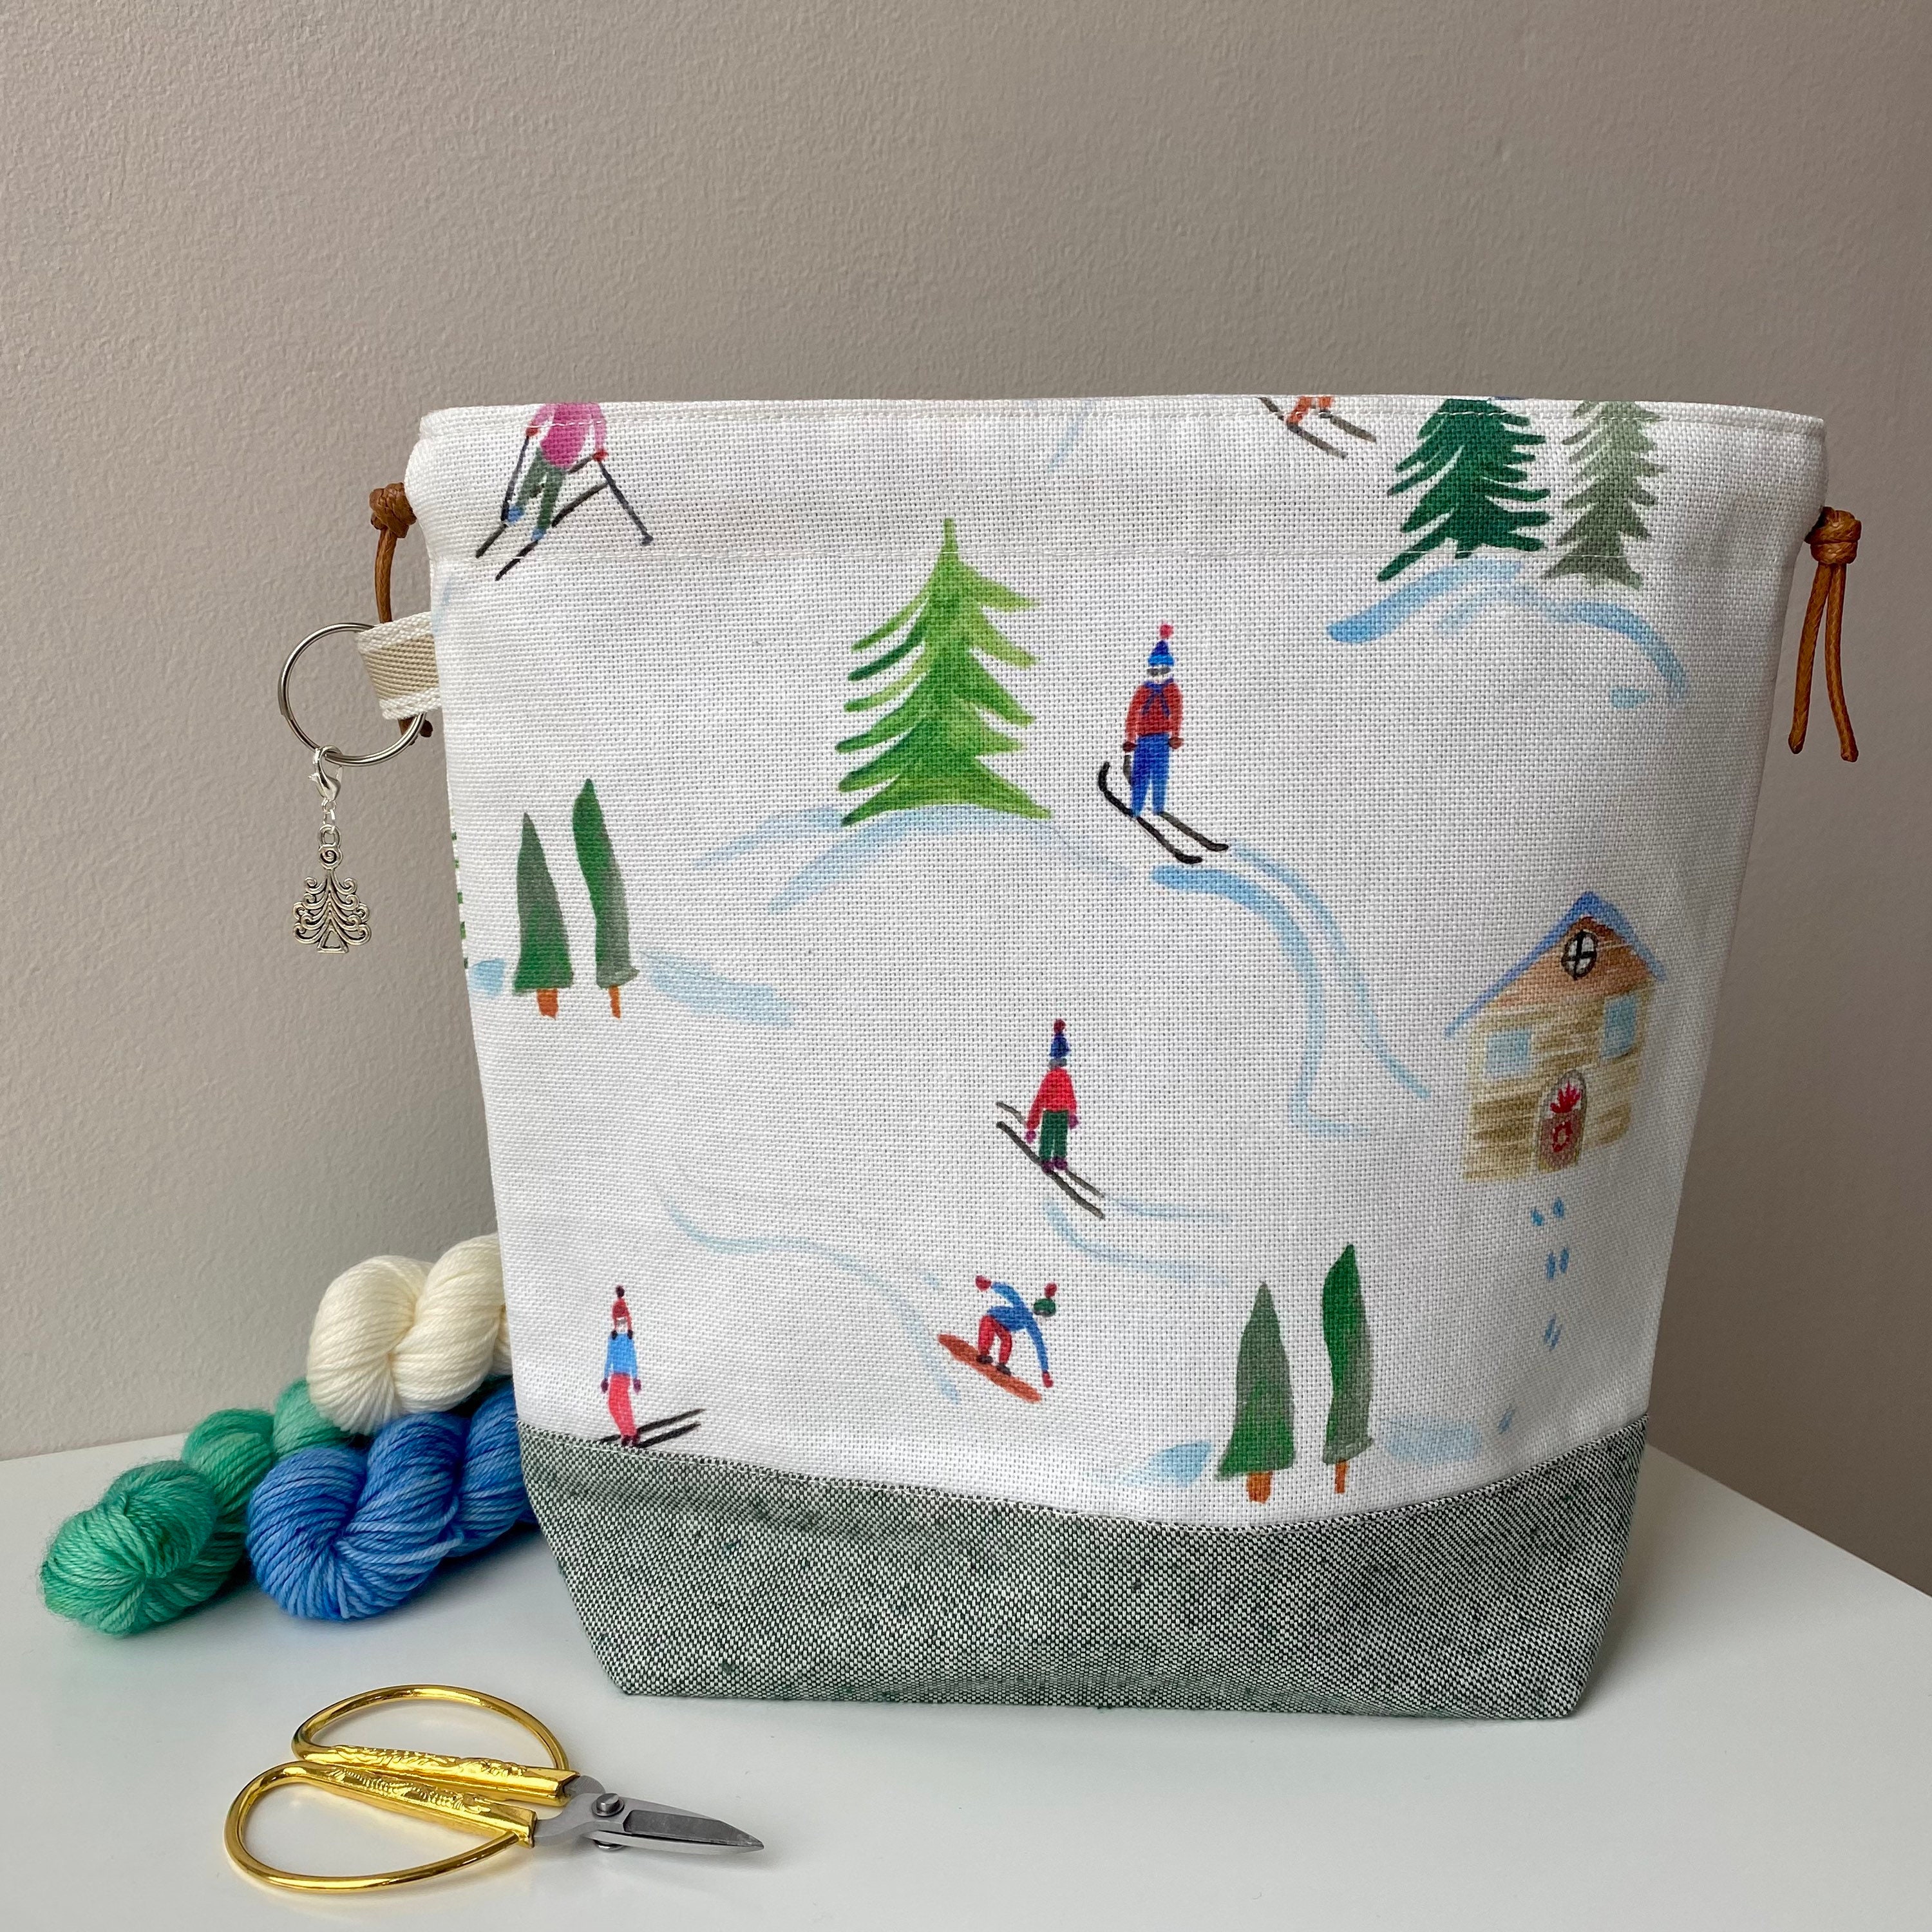 SDIVADesigns Project Bags (Small) | knittingthestash